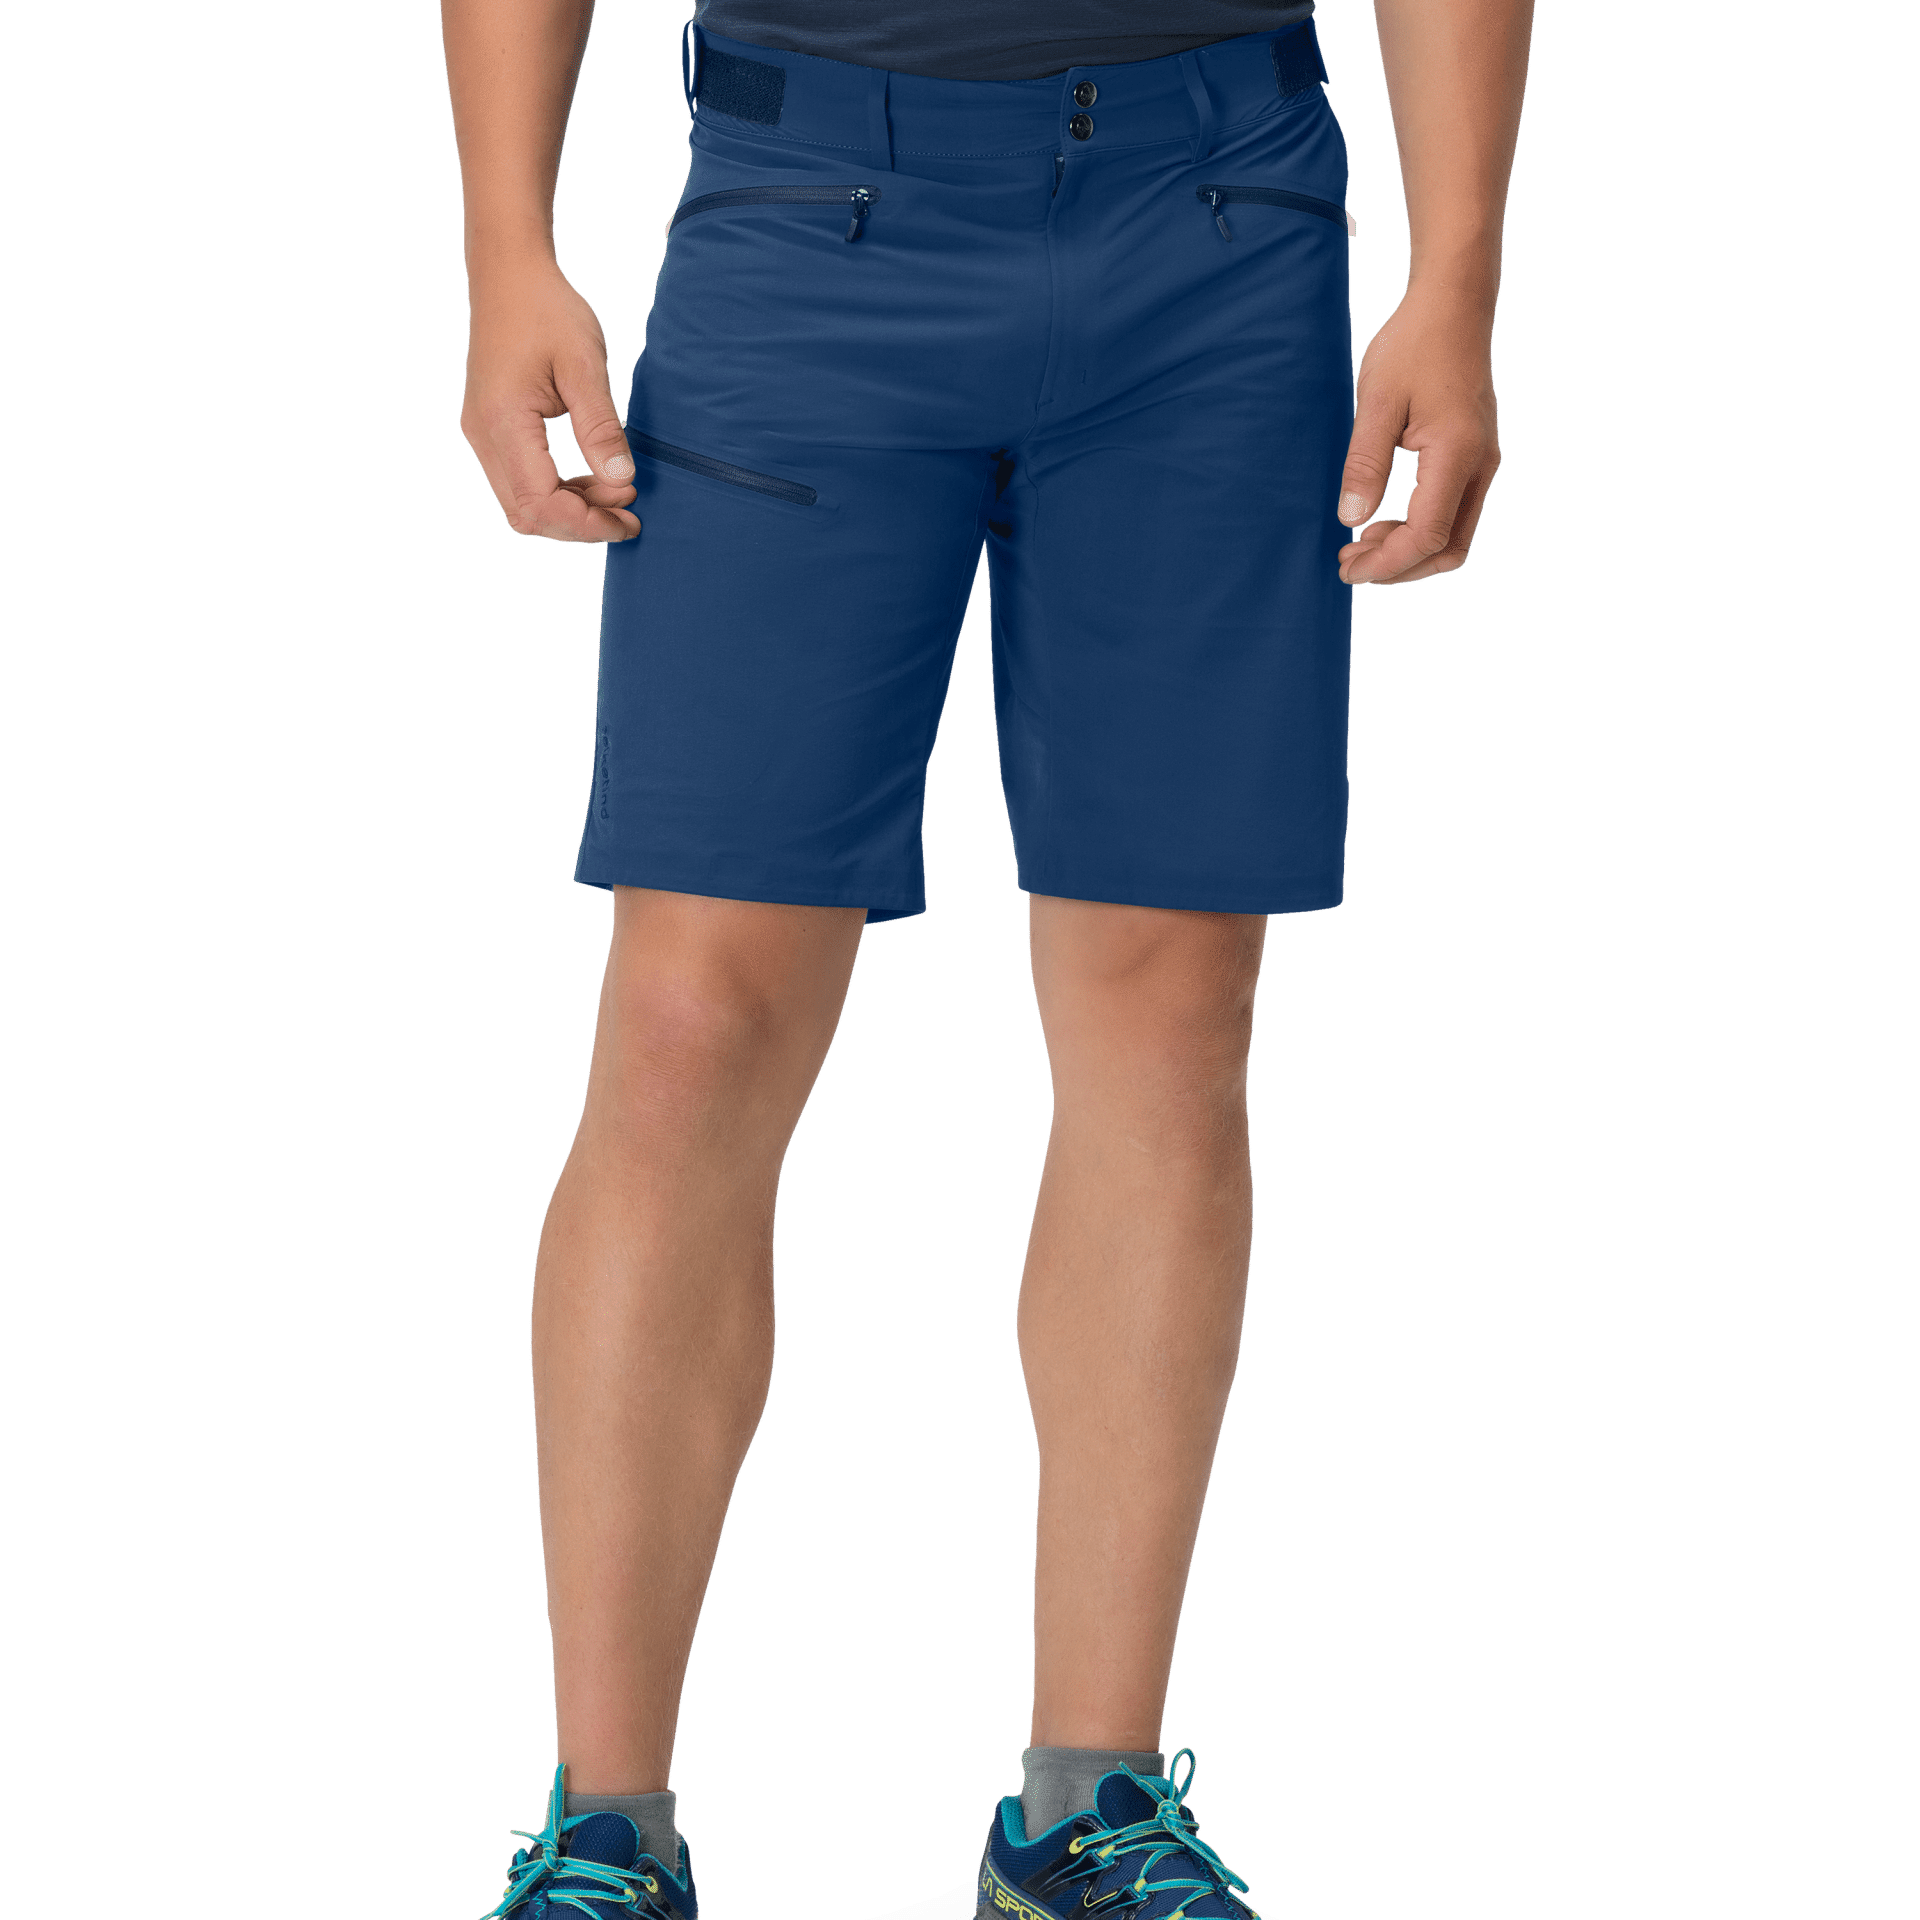 Nørrona Falketind Flex1 Shorts - Hiking shorts - Men's